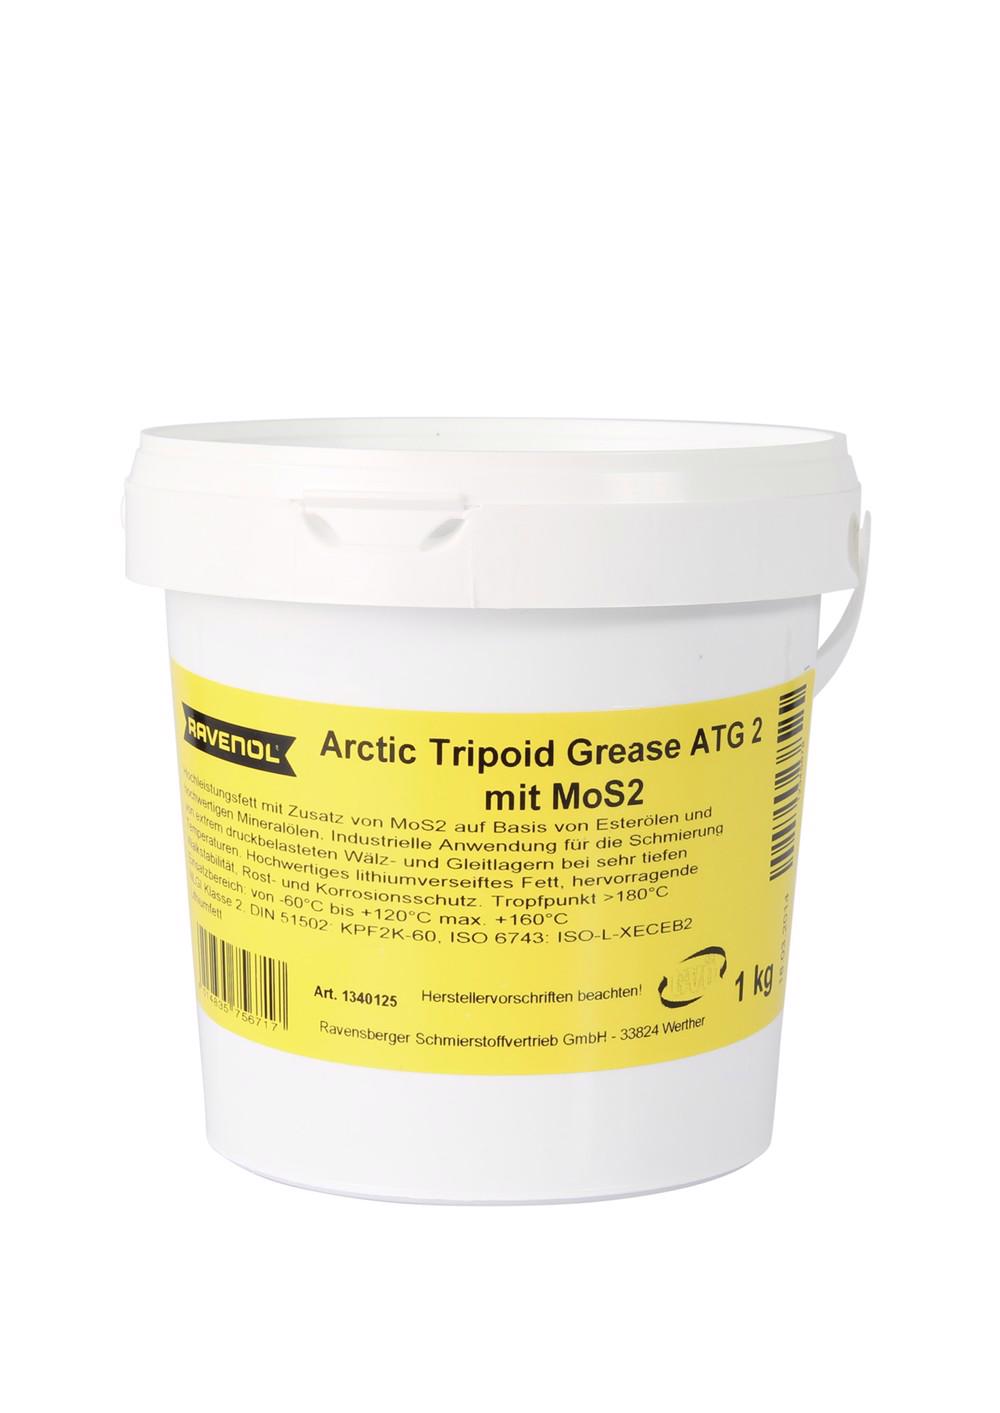 RAVENOL Arctic Tripoid Grease ATG 2 mit MoS2  1 kg